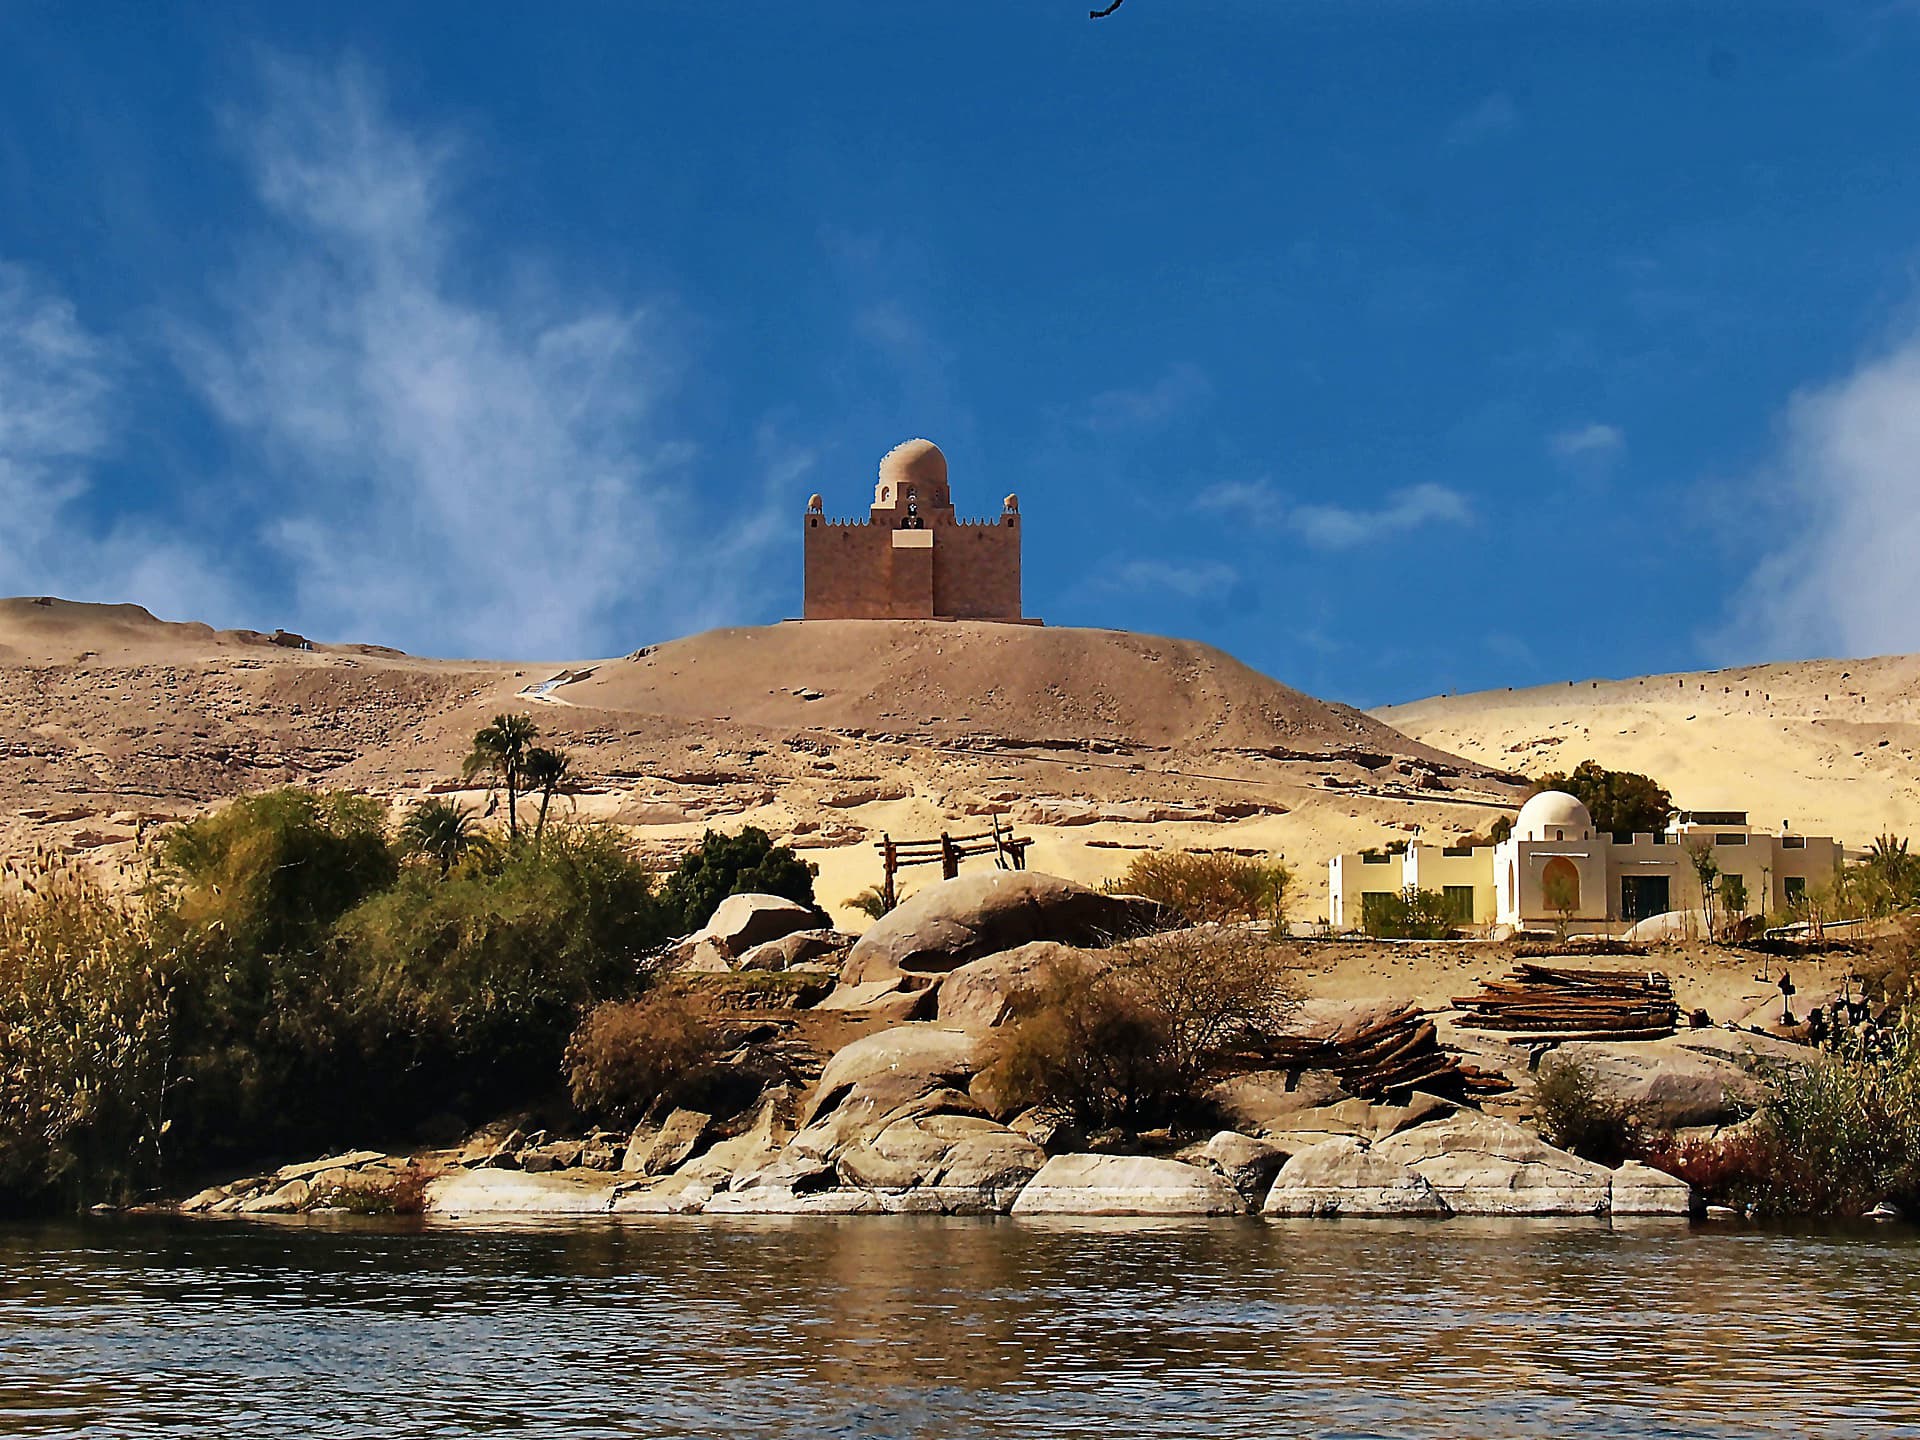 Aswan in Egypt